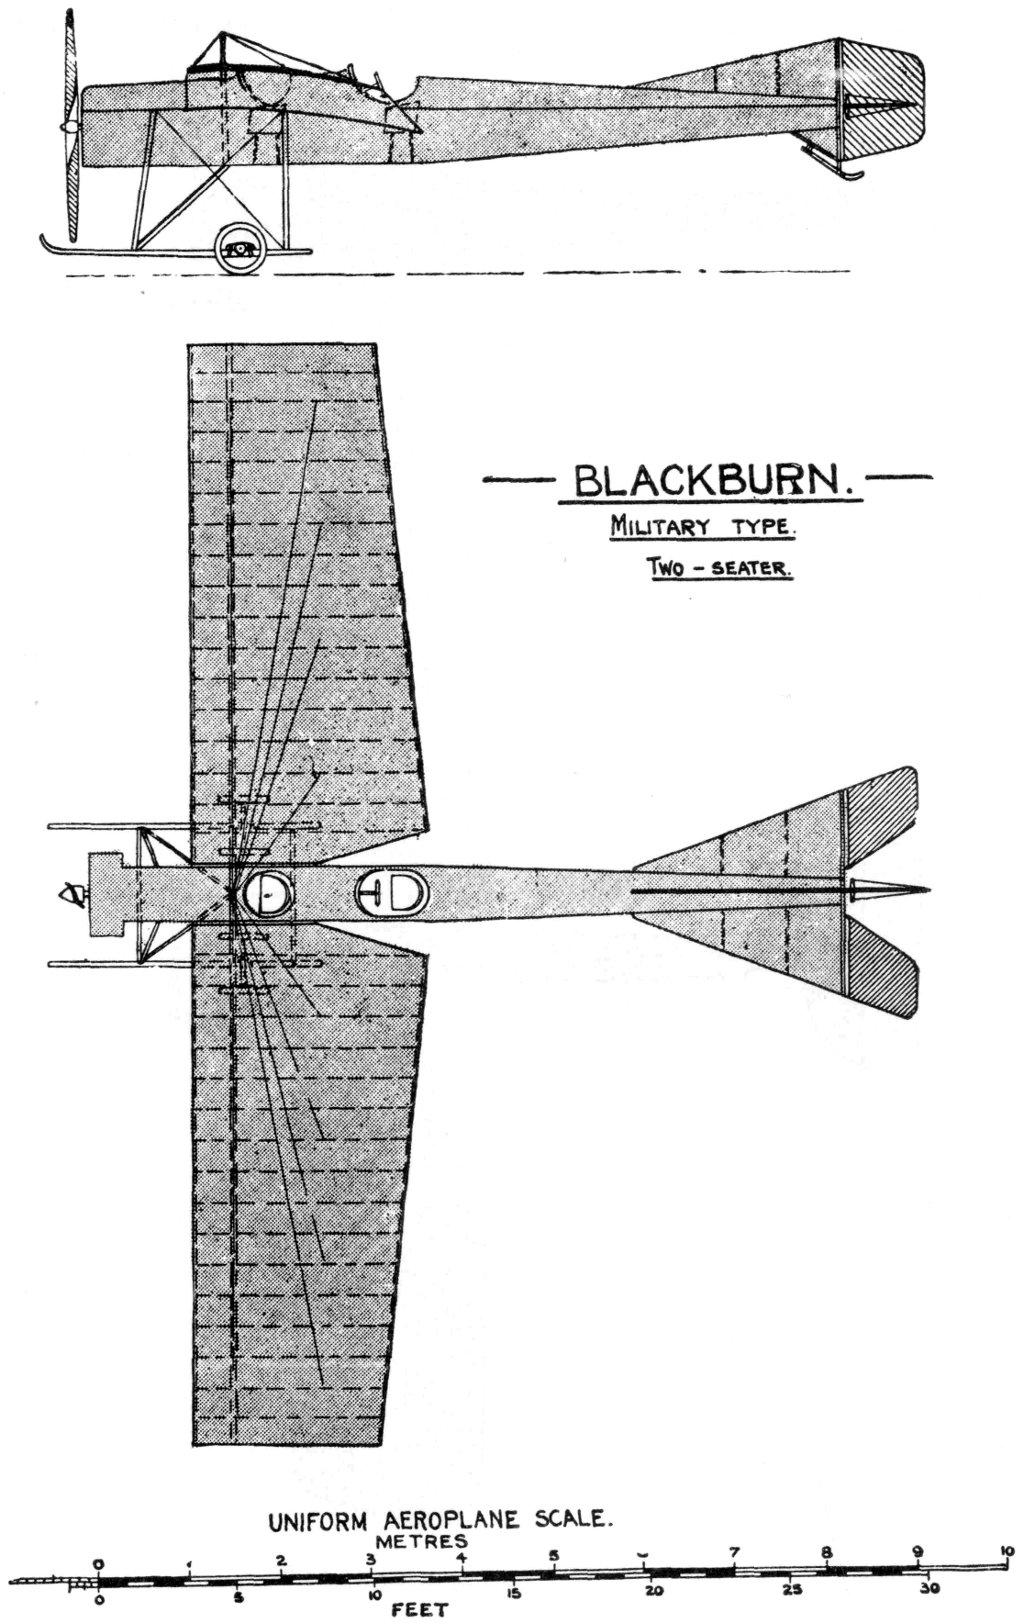 BLACKBURN. Military Type. Two-seater. Uniform Aeroplane Scale